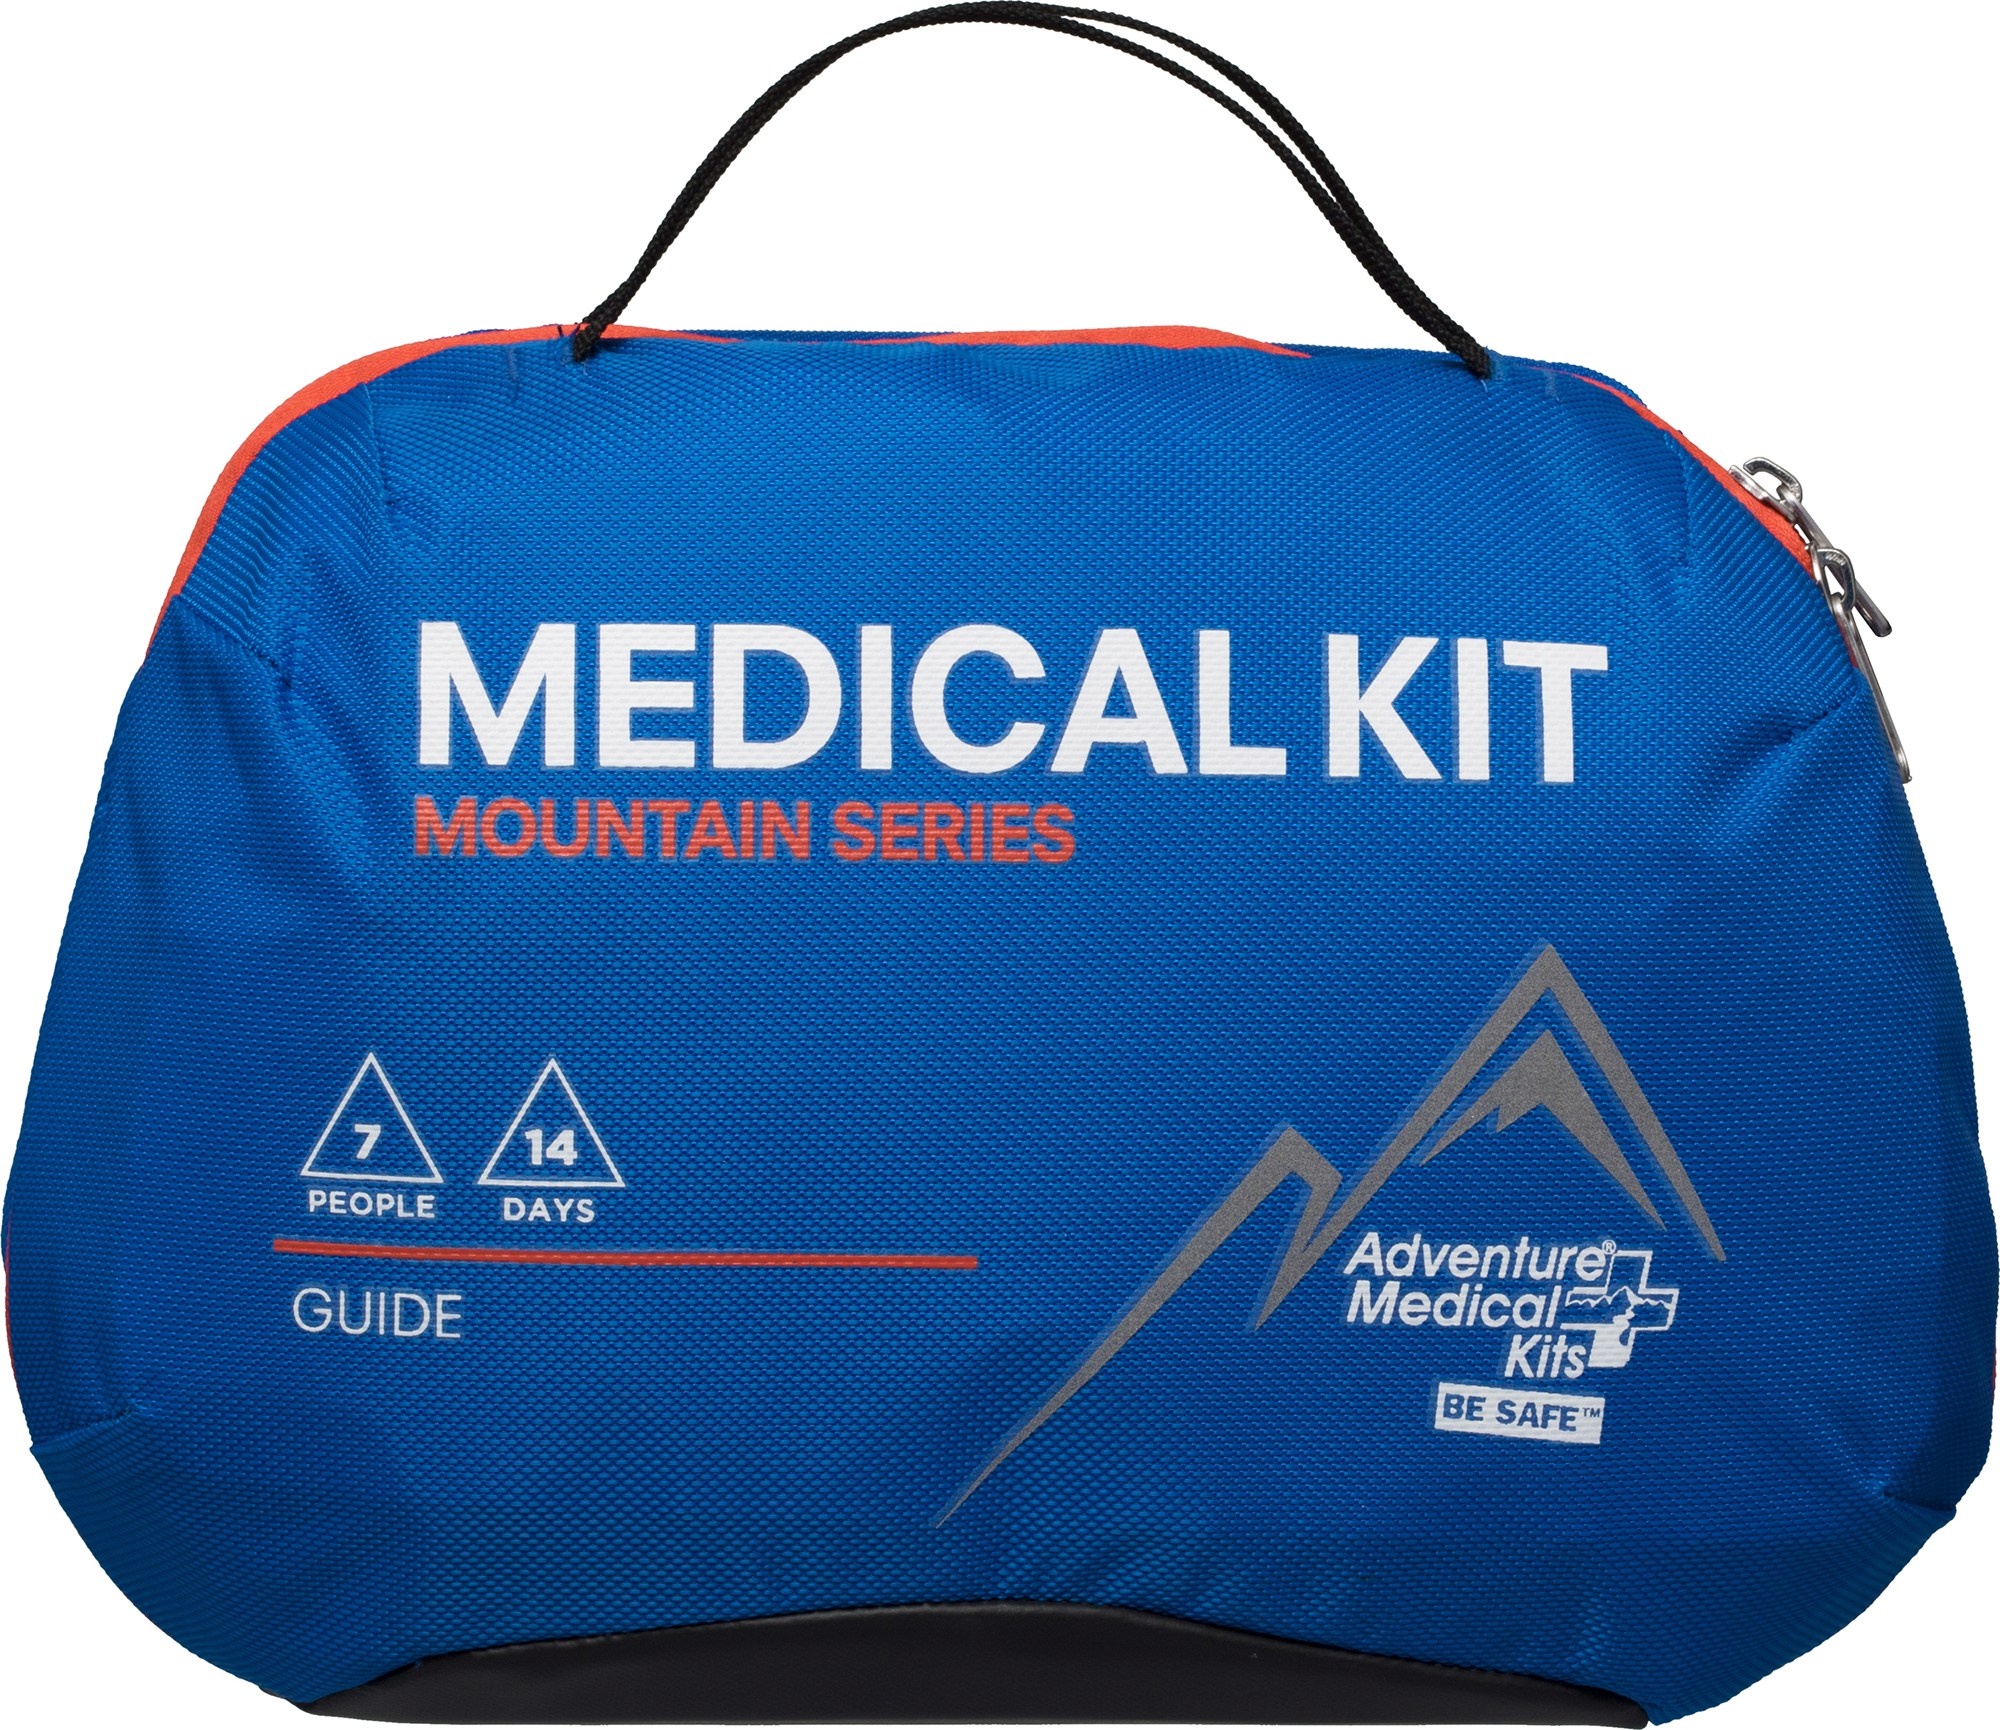 Медицинская аптечка Mountain Series Guide Adventure Medical Kits, синий